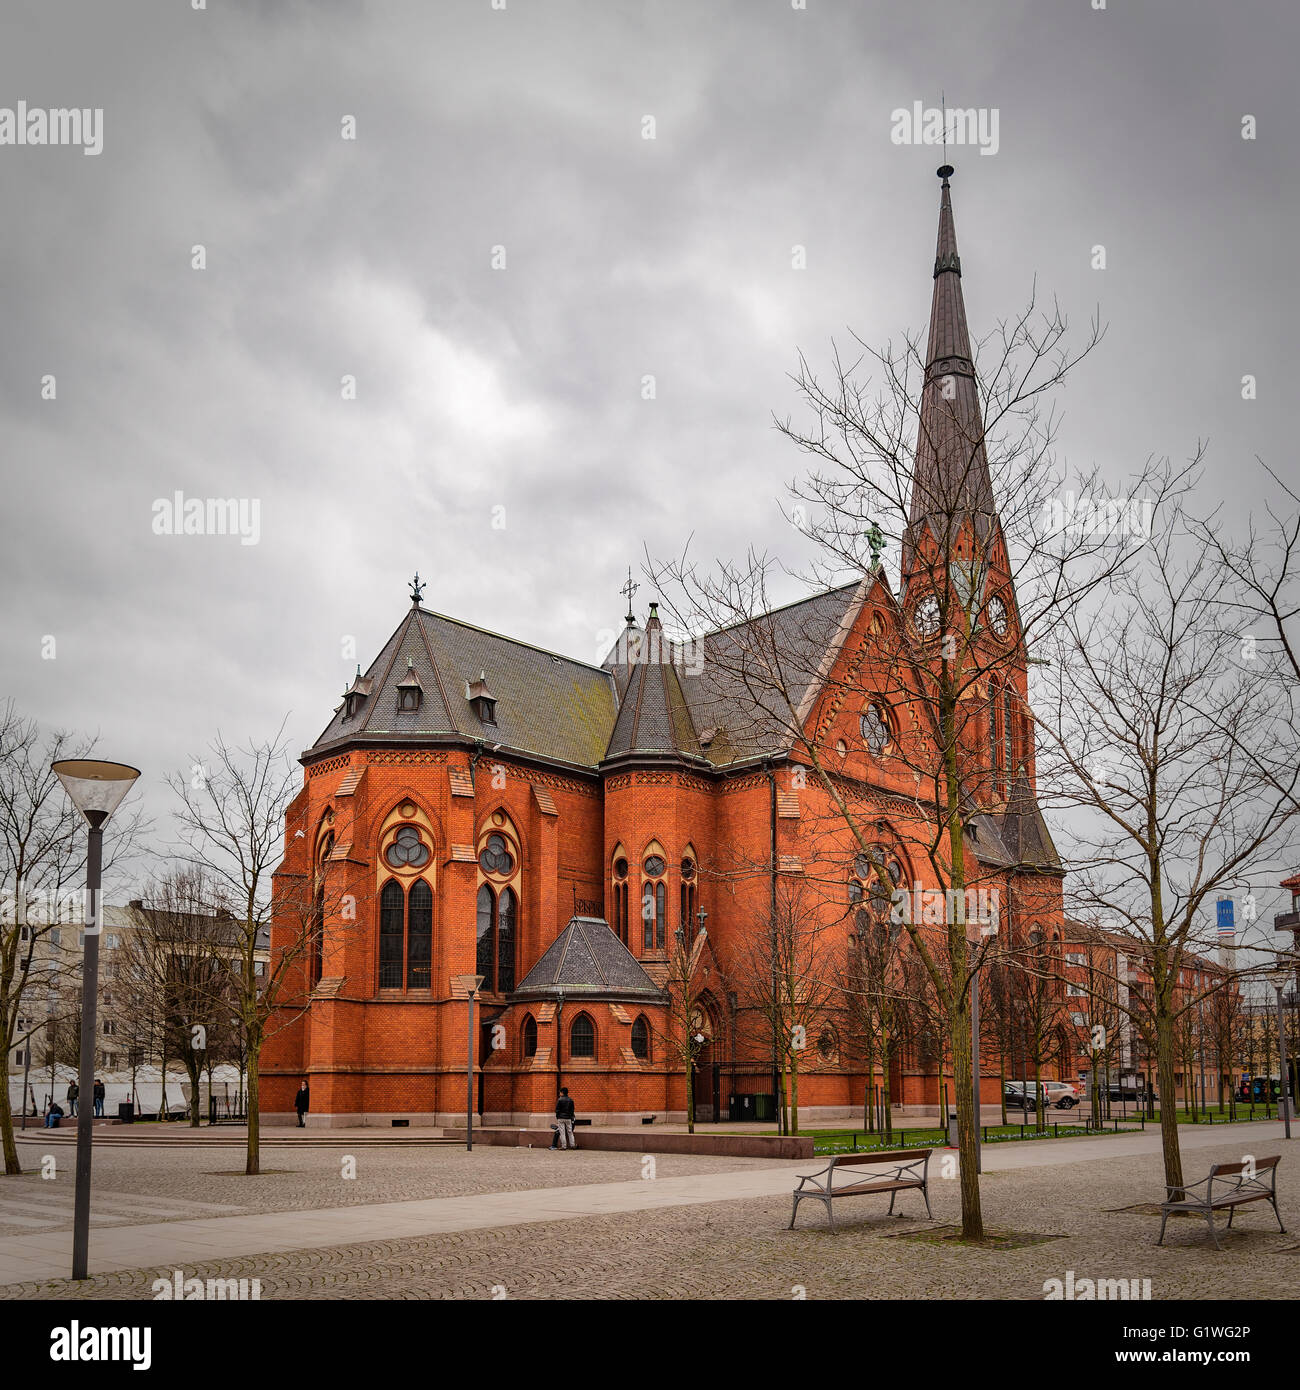 The Gustav Adolf church in the southside of Helsingborg city in Sweden. Stock Photo